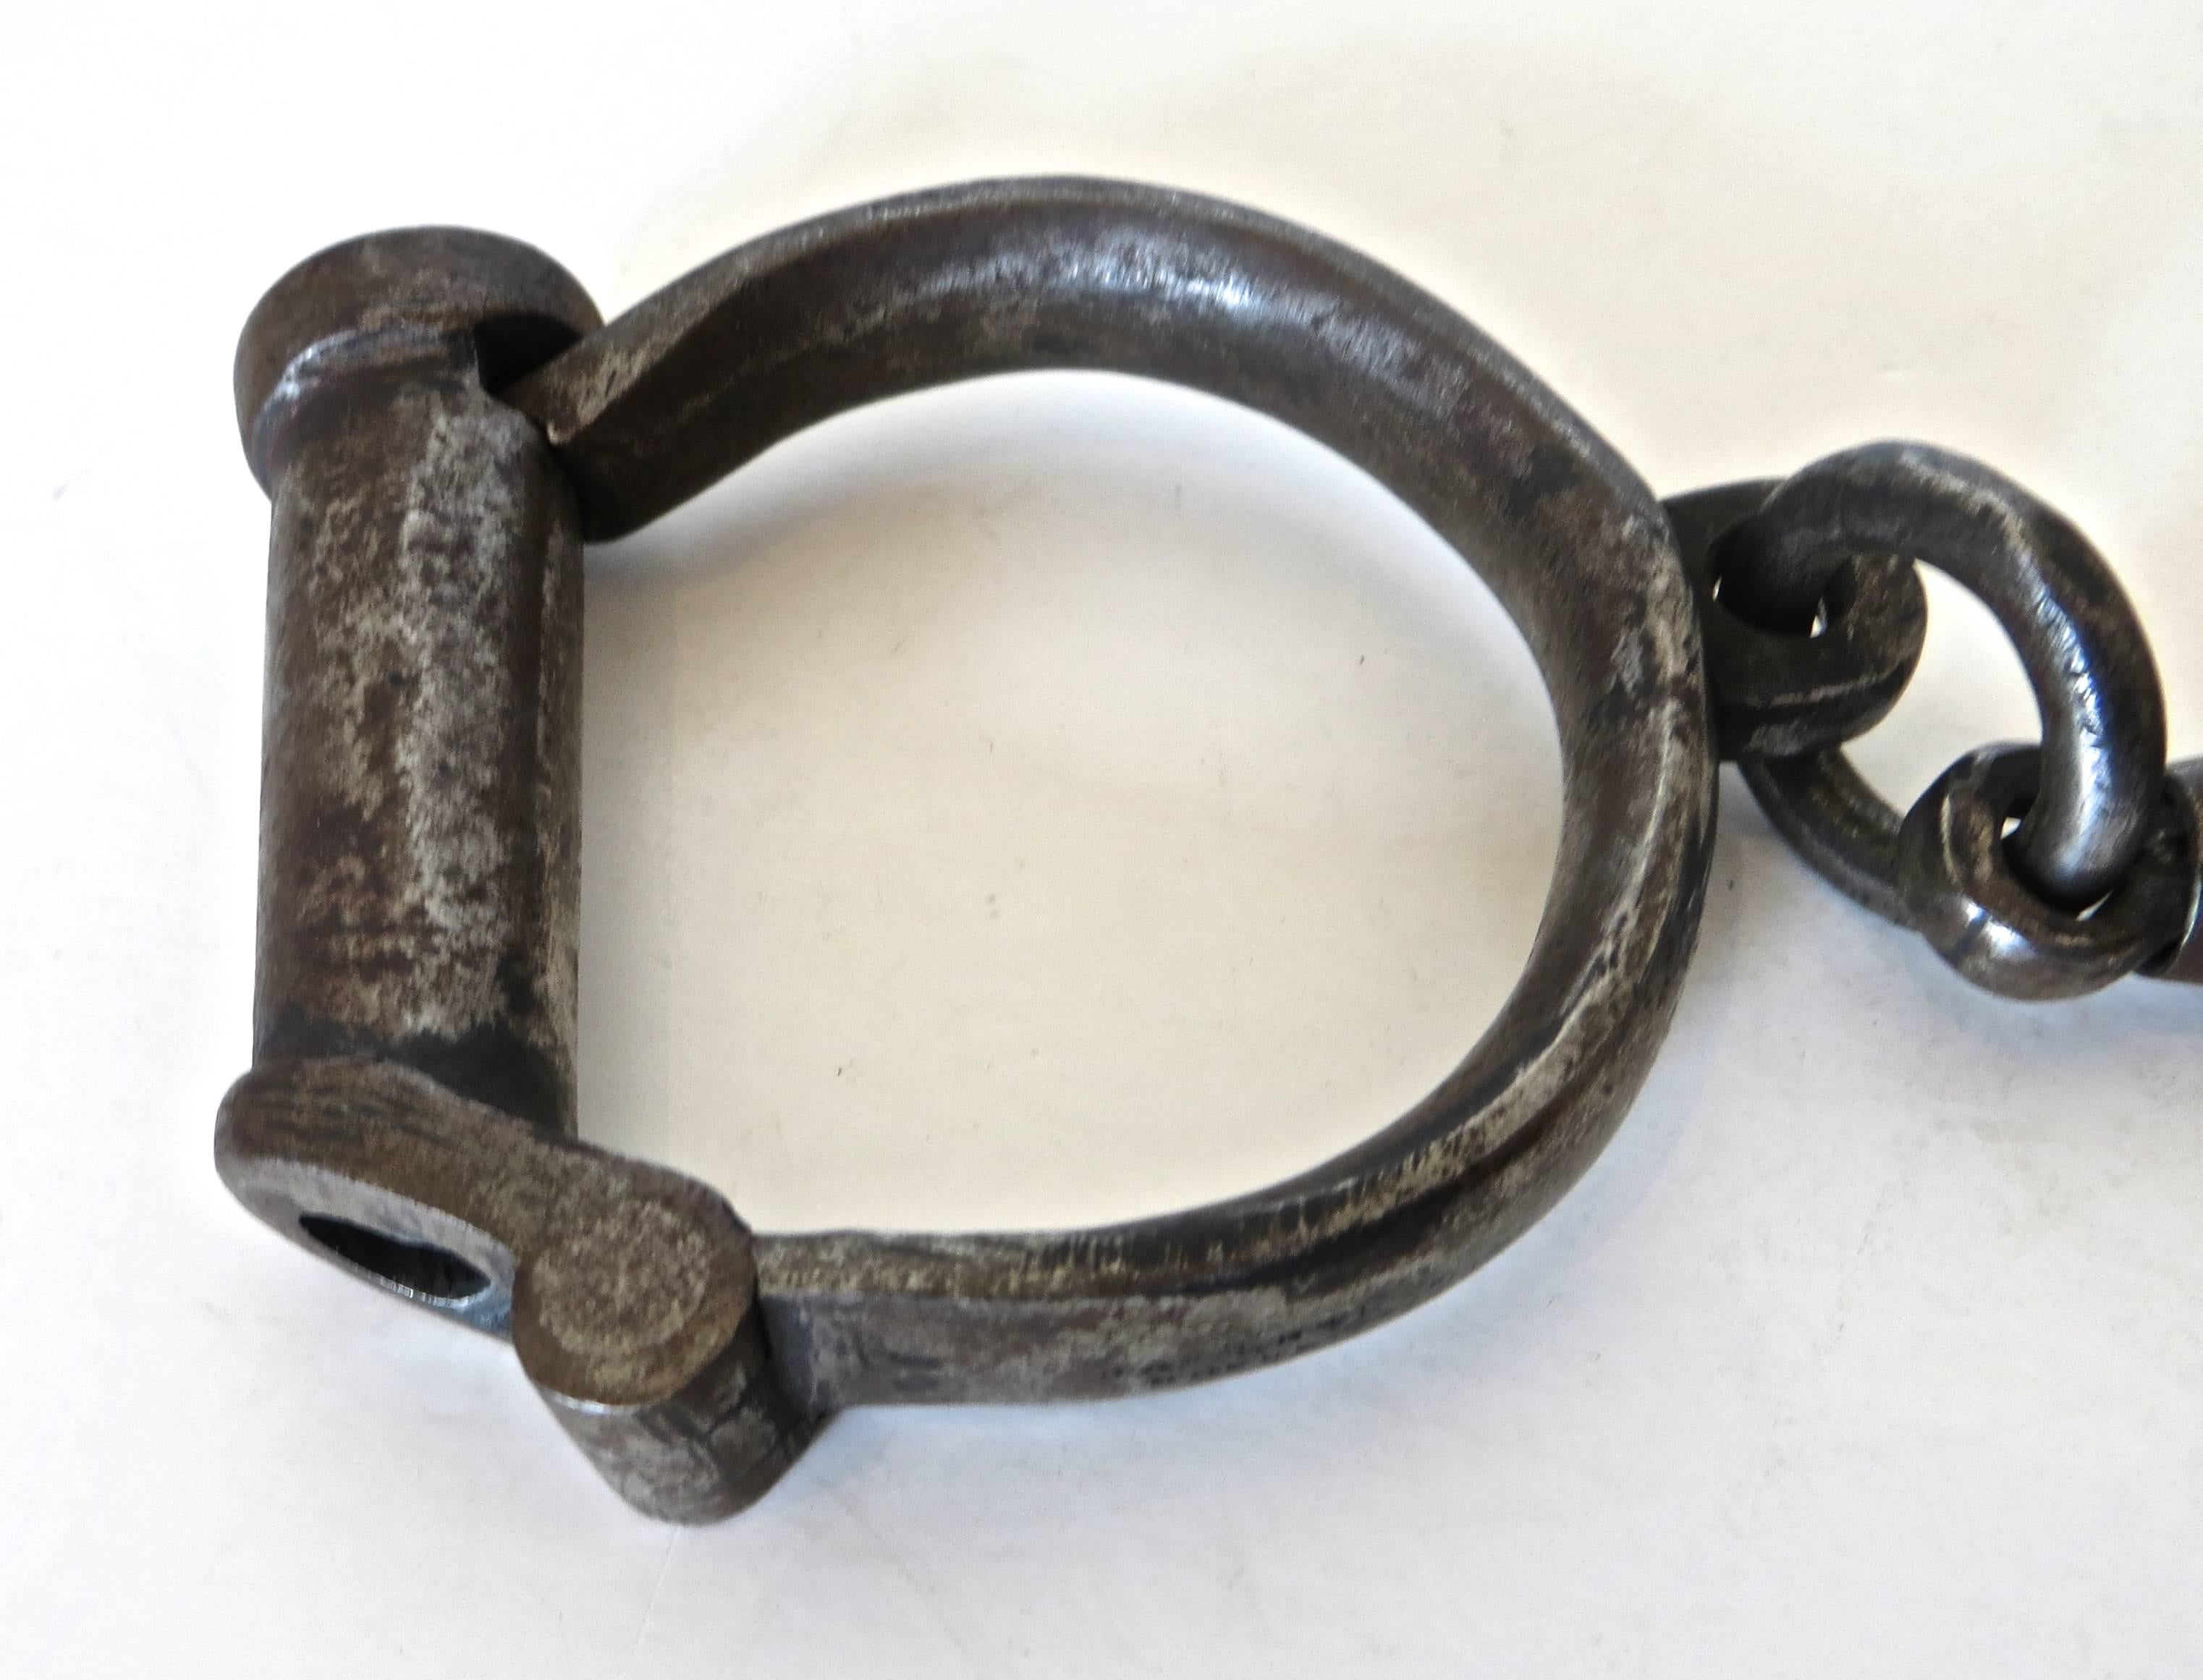 Folk Art Handcuffs by Hiatt, England 'Prop from Magician' Labeled#297, circa 1870